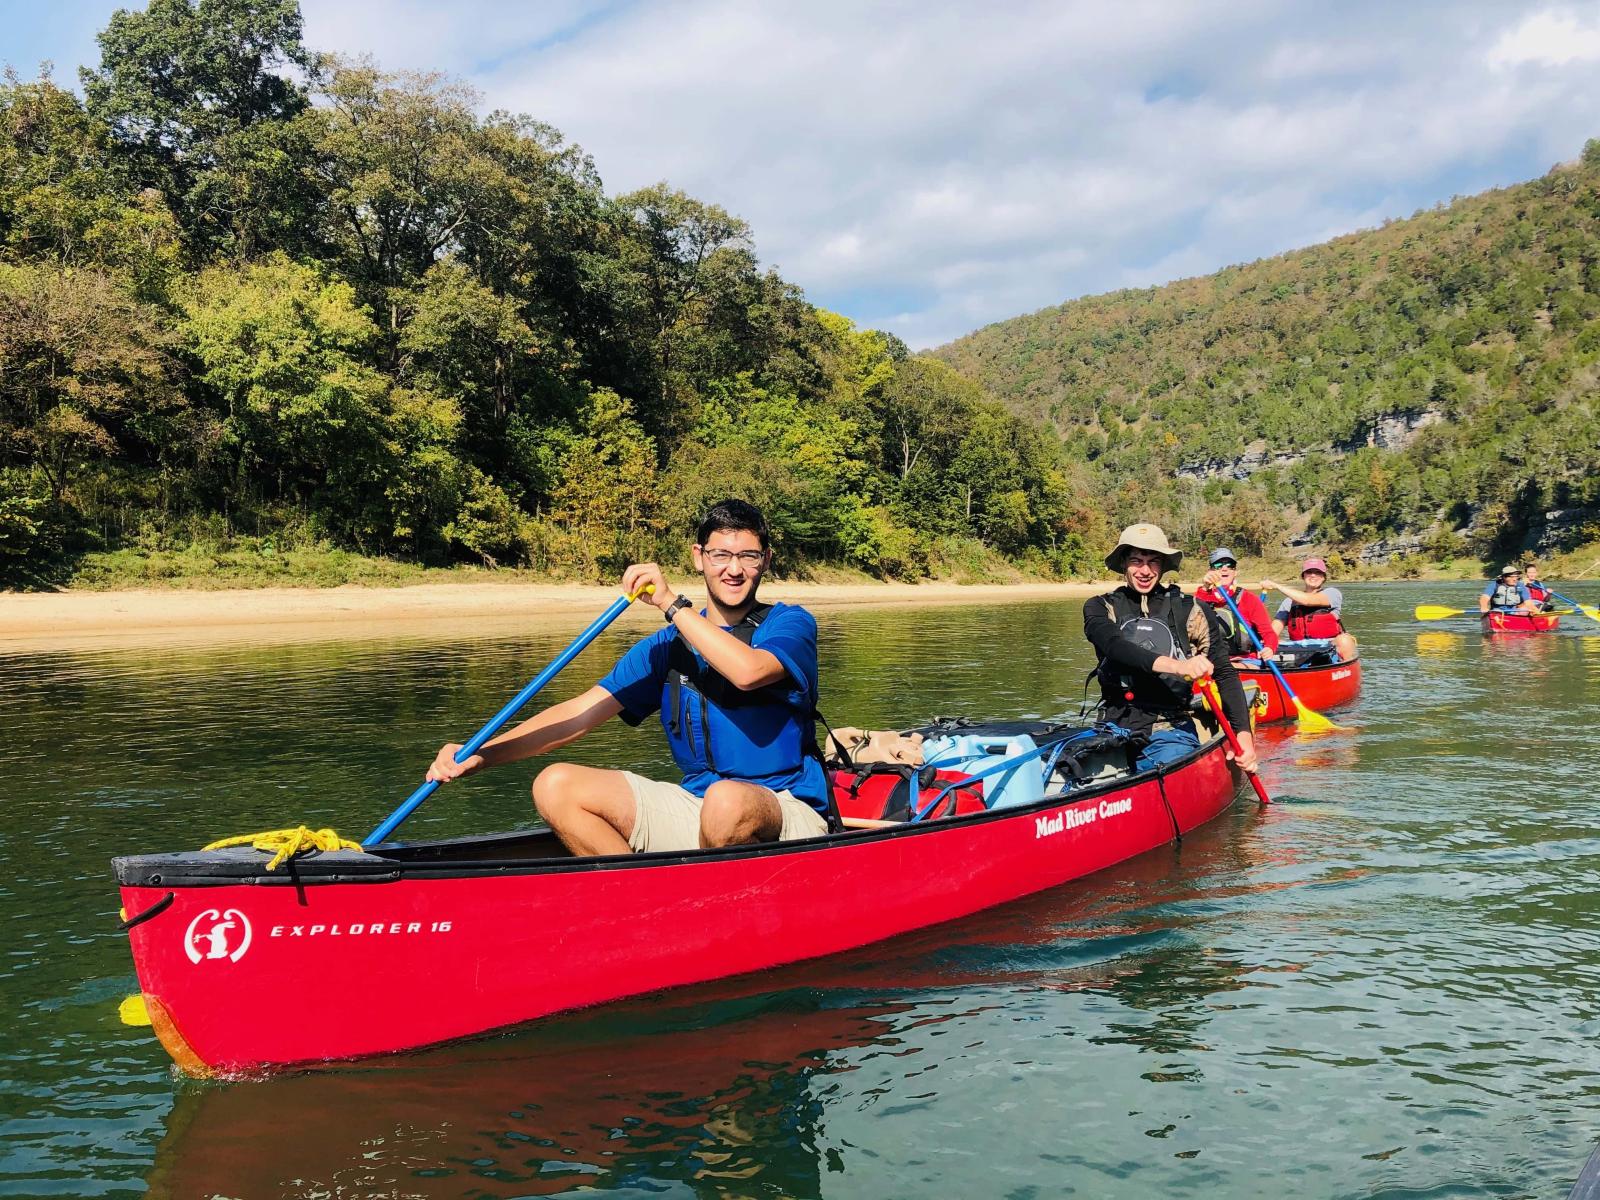 Adventure Trip canoes down the Buffalo River